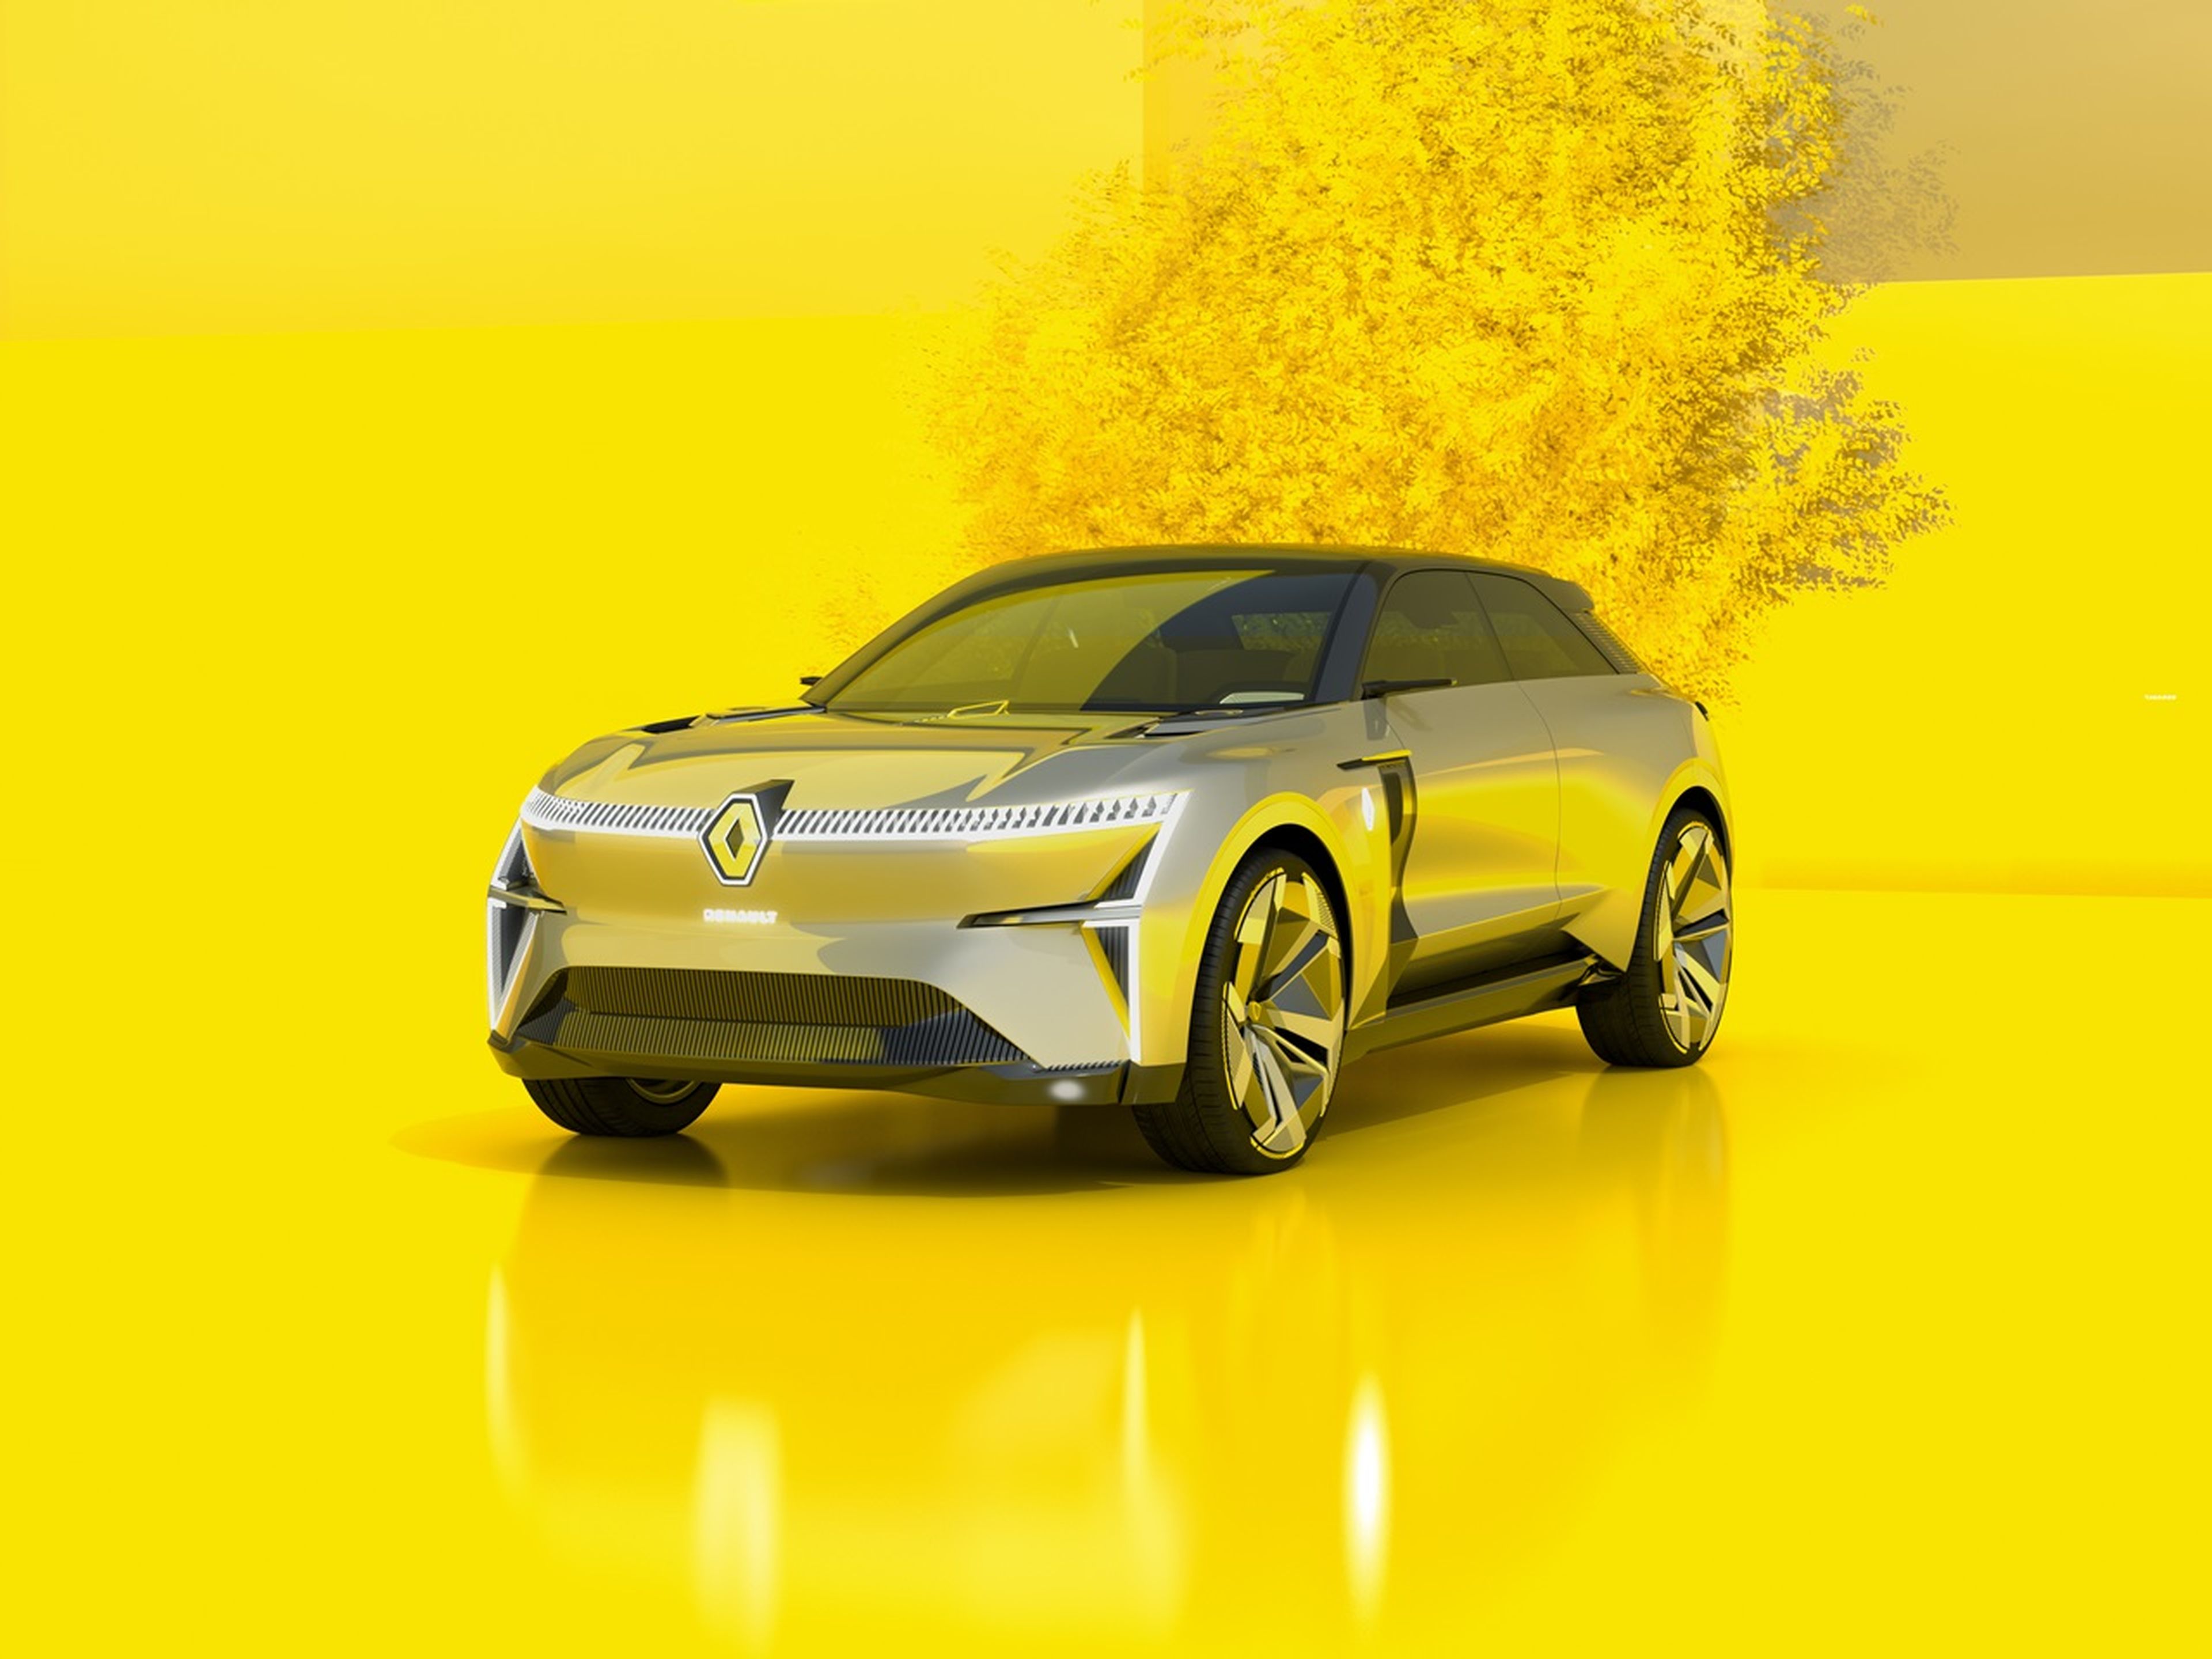 Renault Morphoz